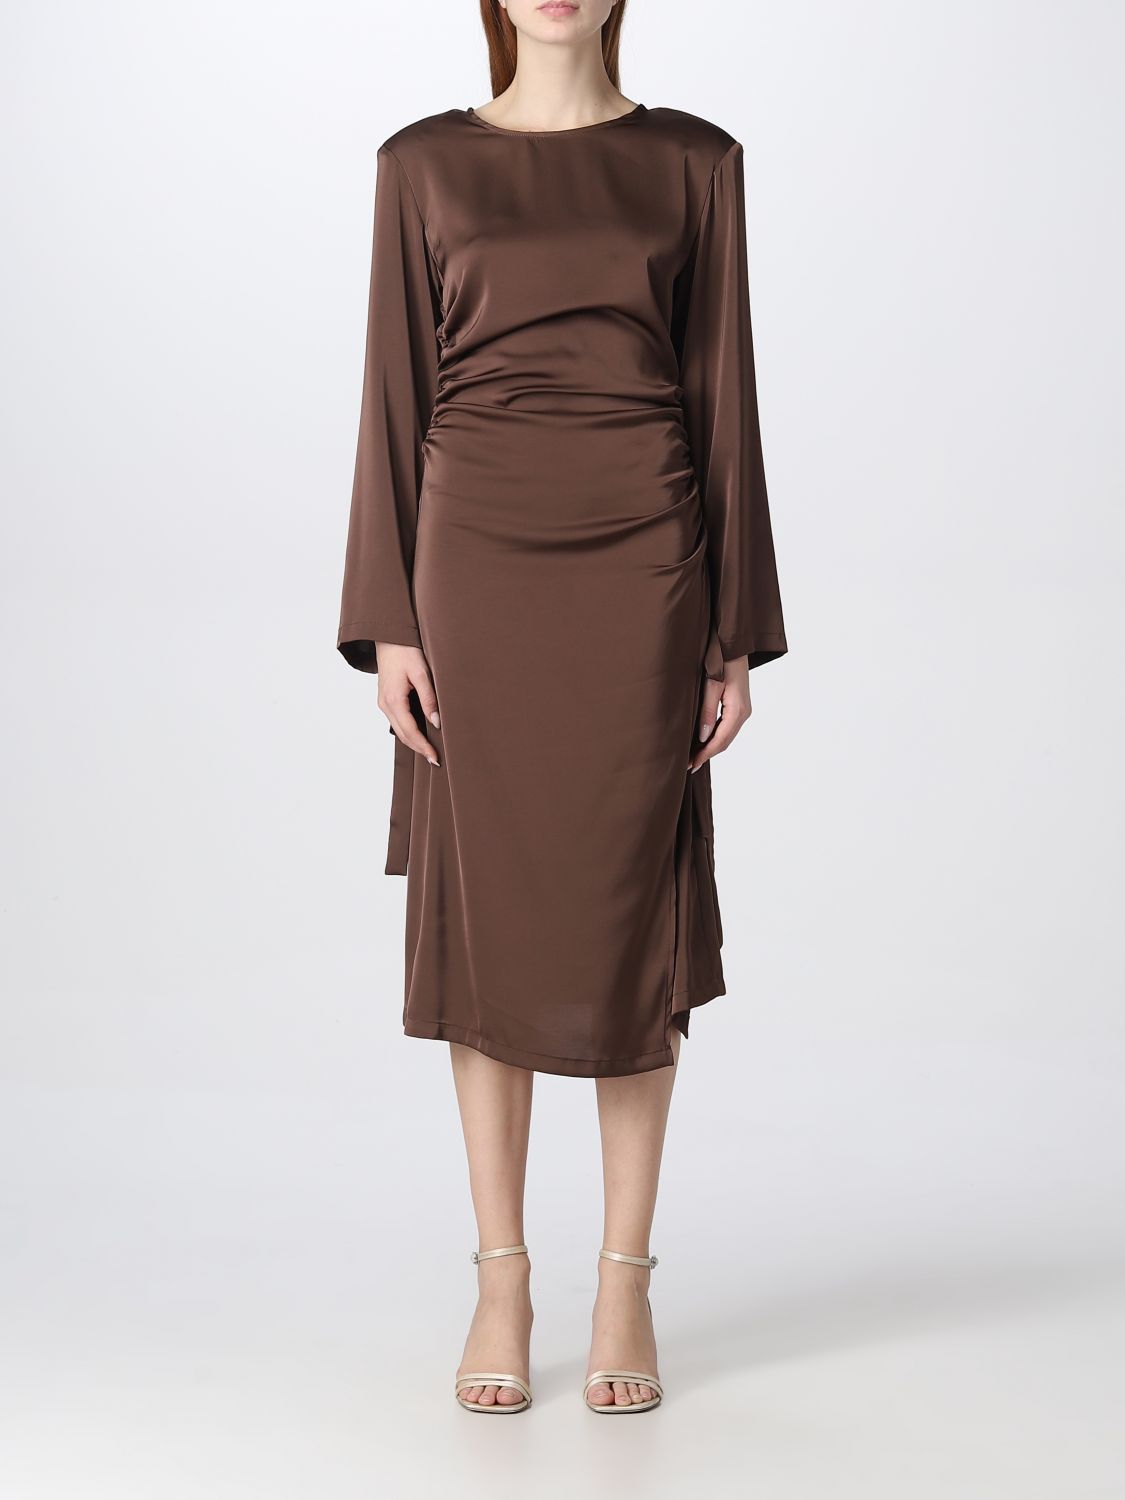 Weili Zheng Dresses  Women In Brown